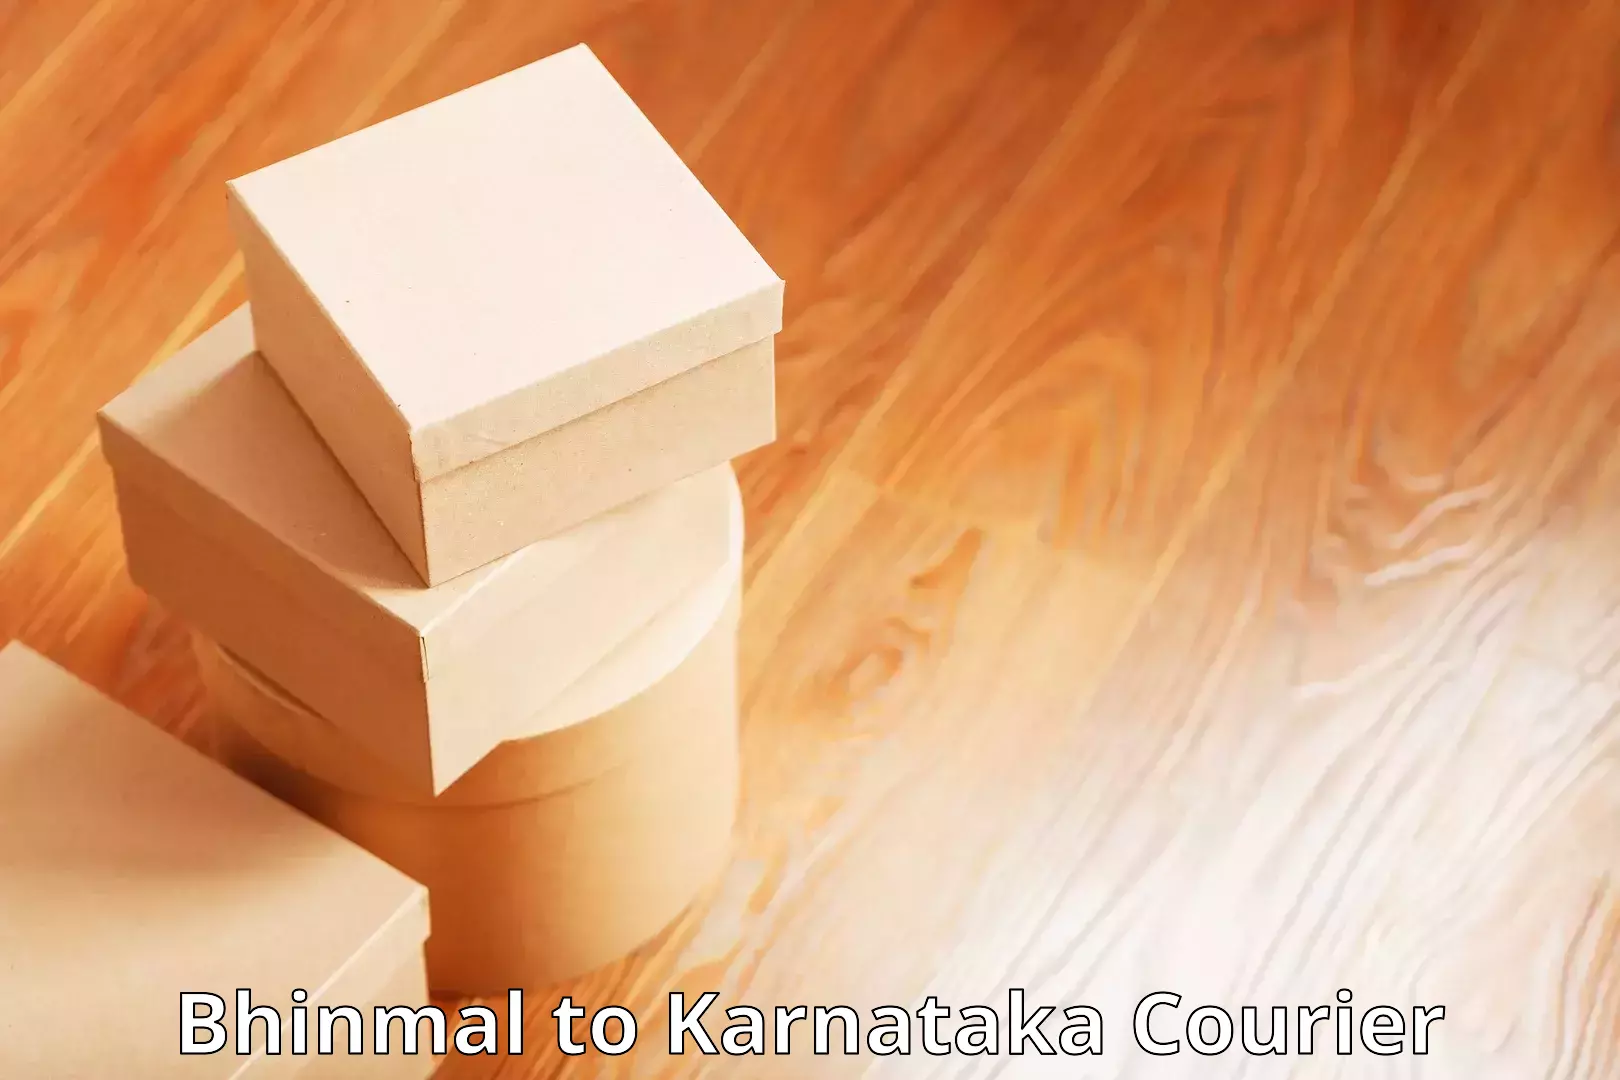 On-call courier service Bhinmal to Karnataka